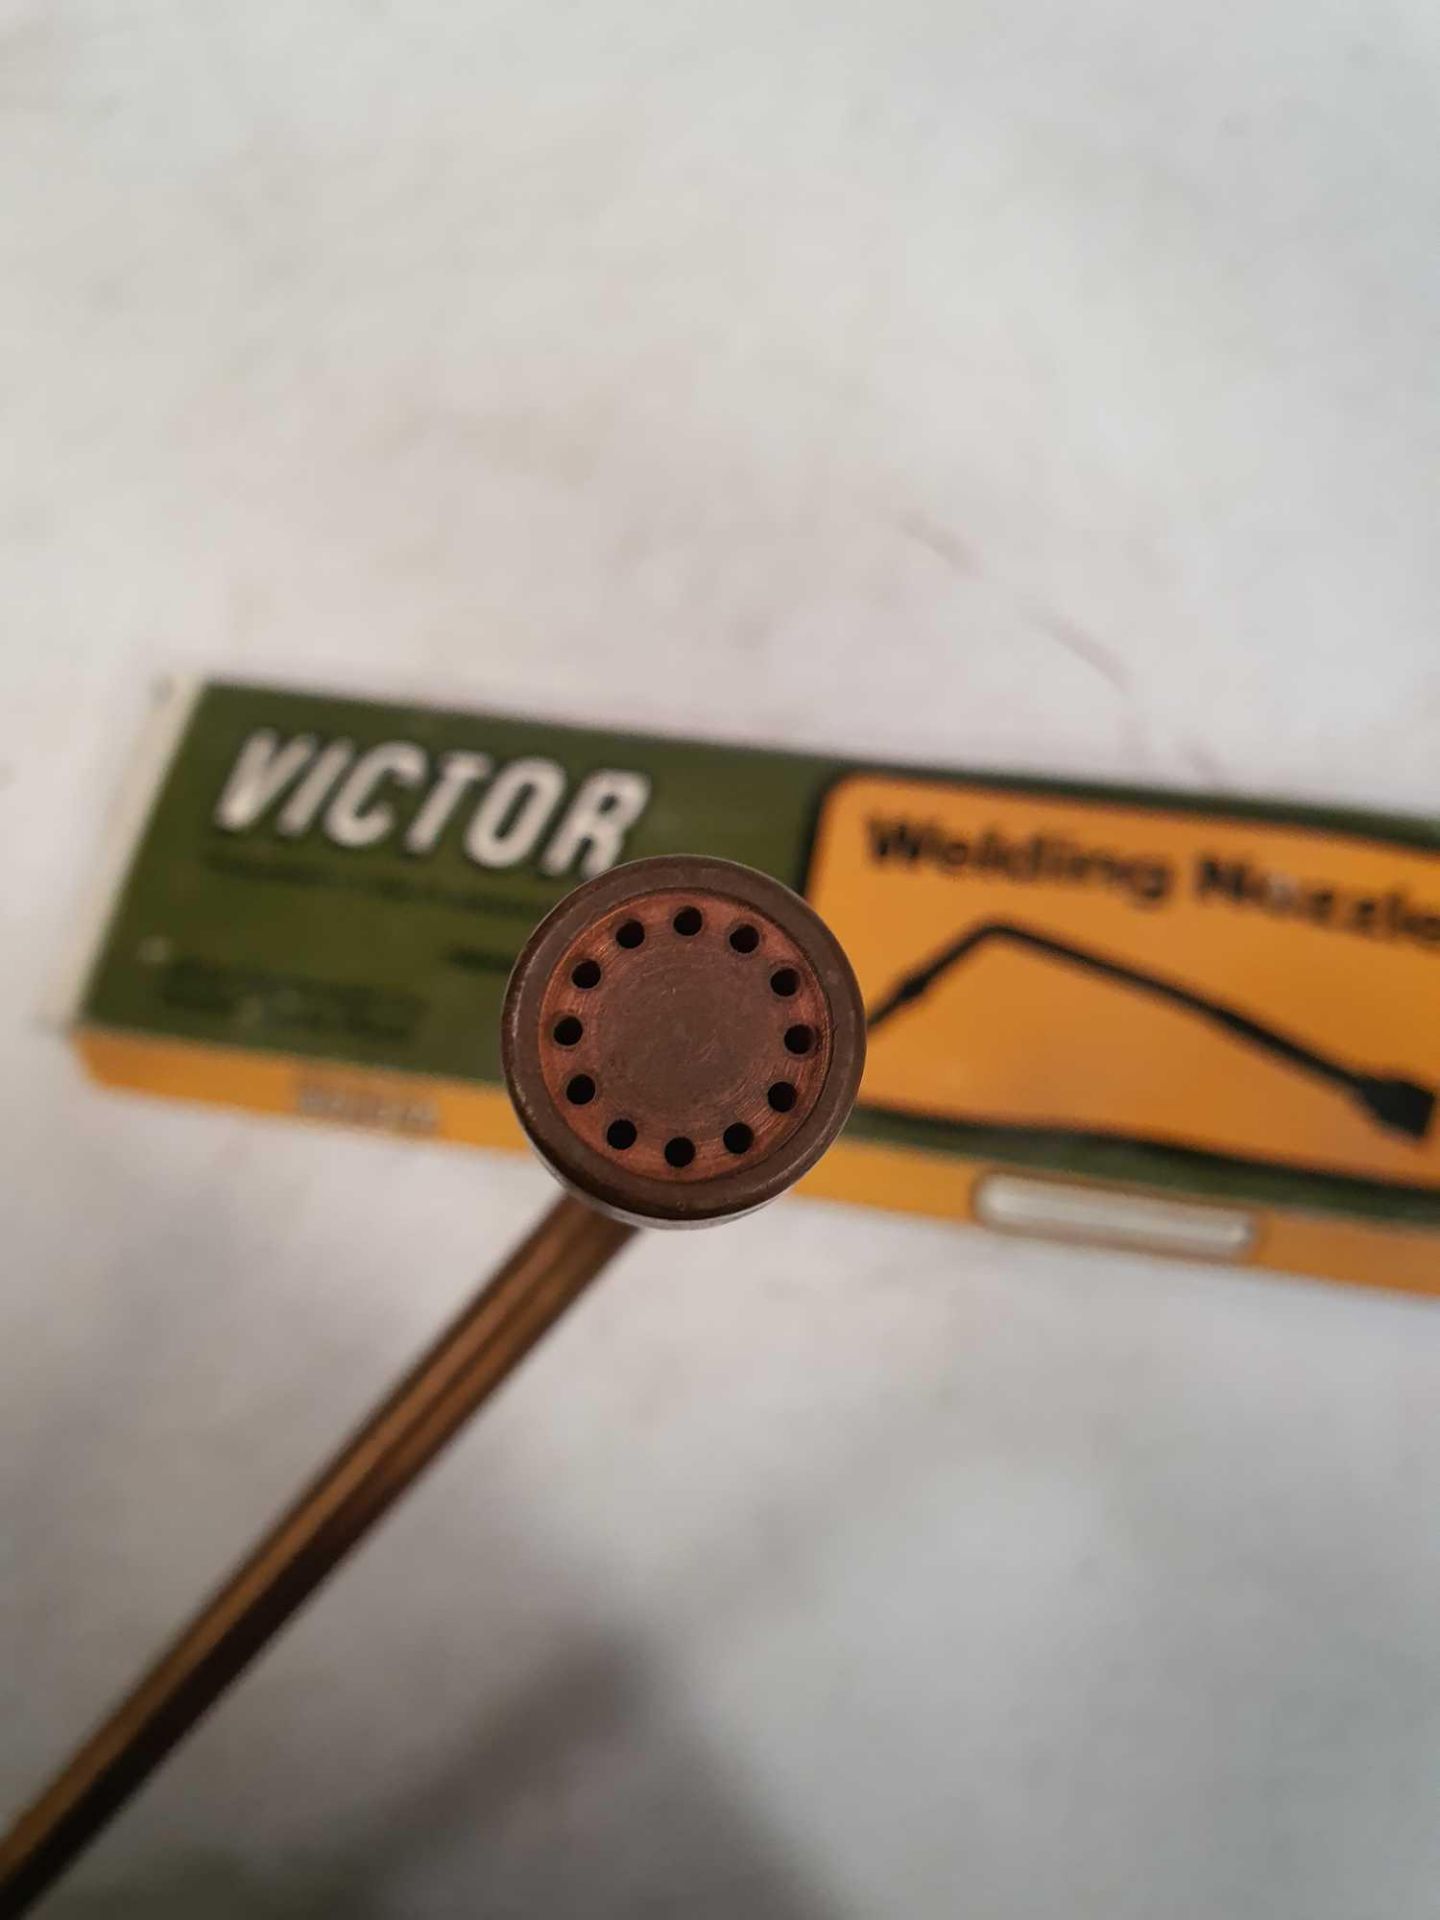 Victor welding nozzle - Image 3 of 3